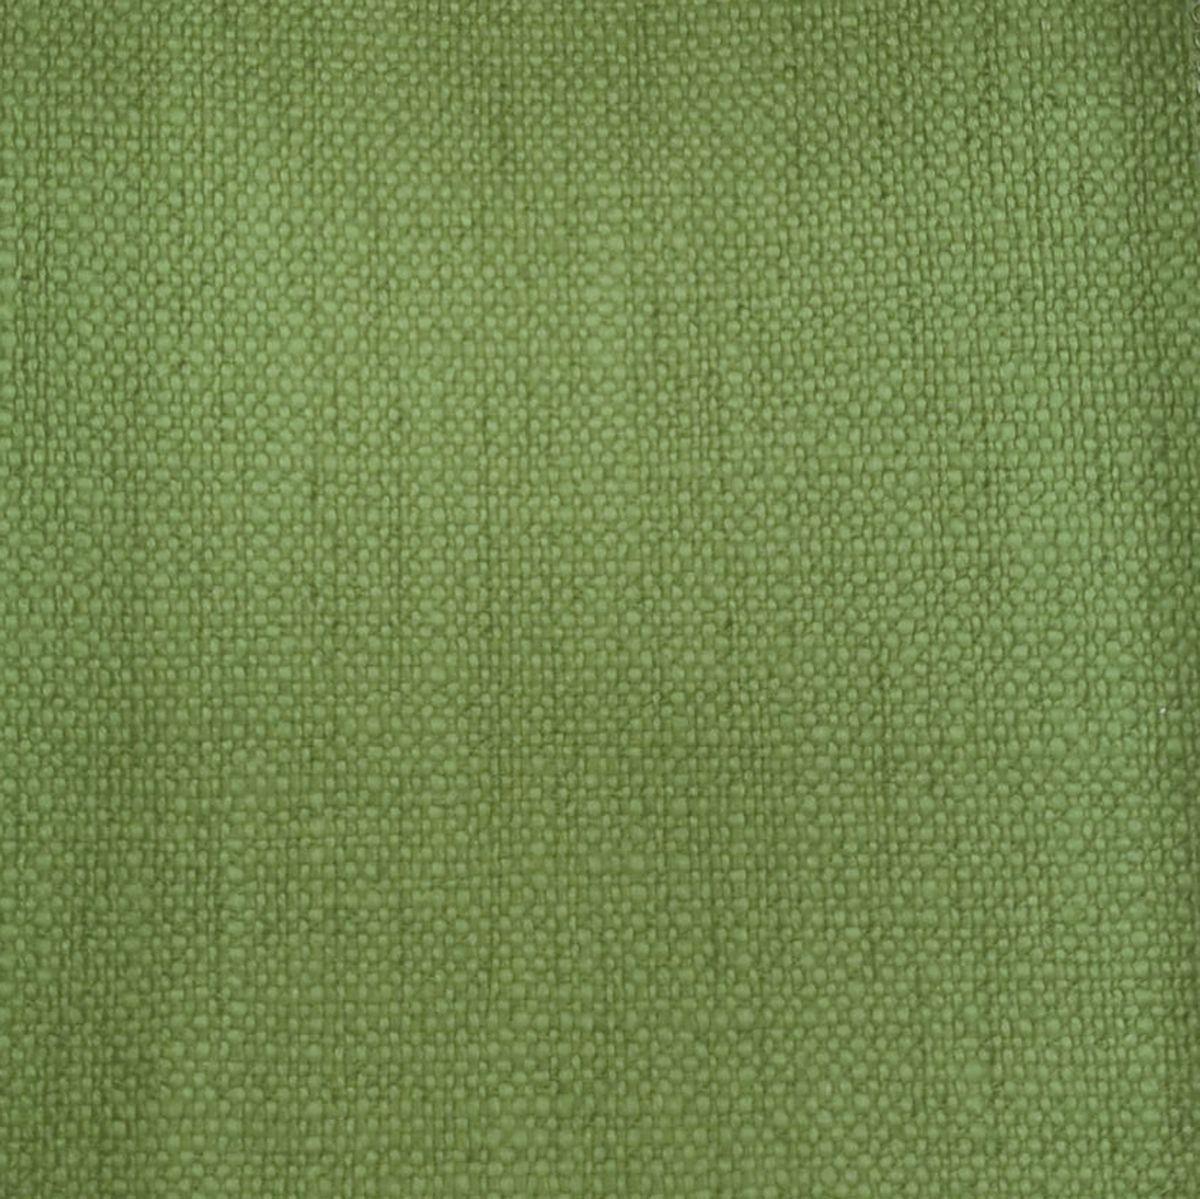 Trento Apple Fabric by Voyage Maison